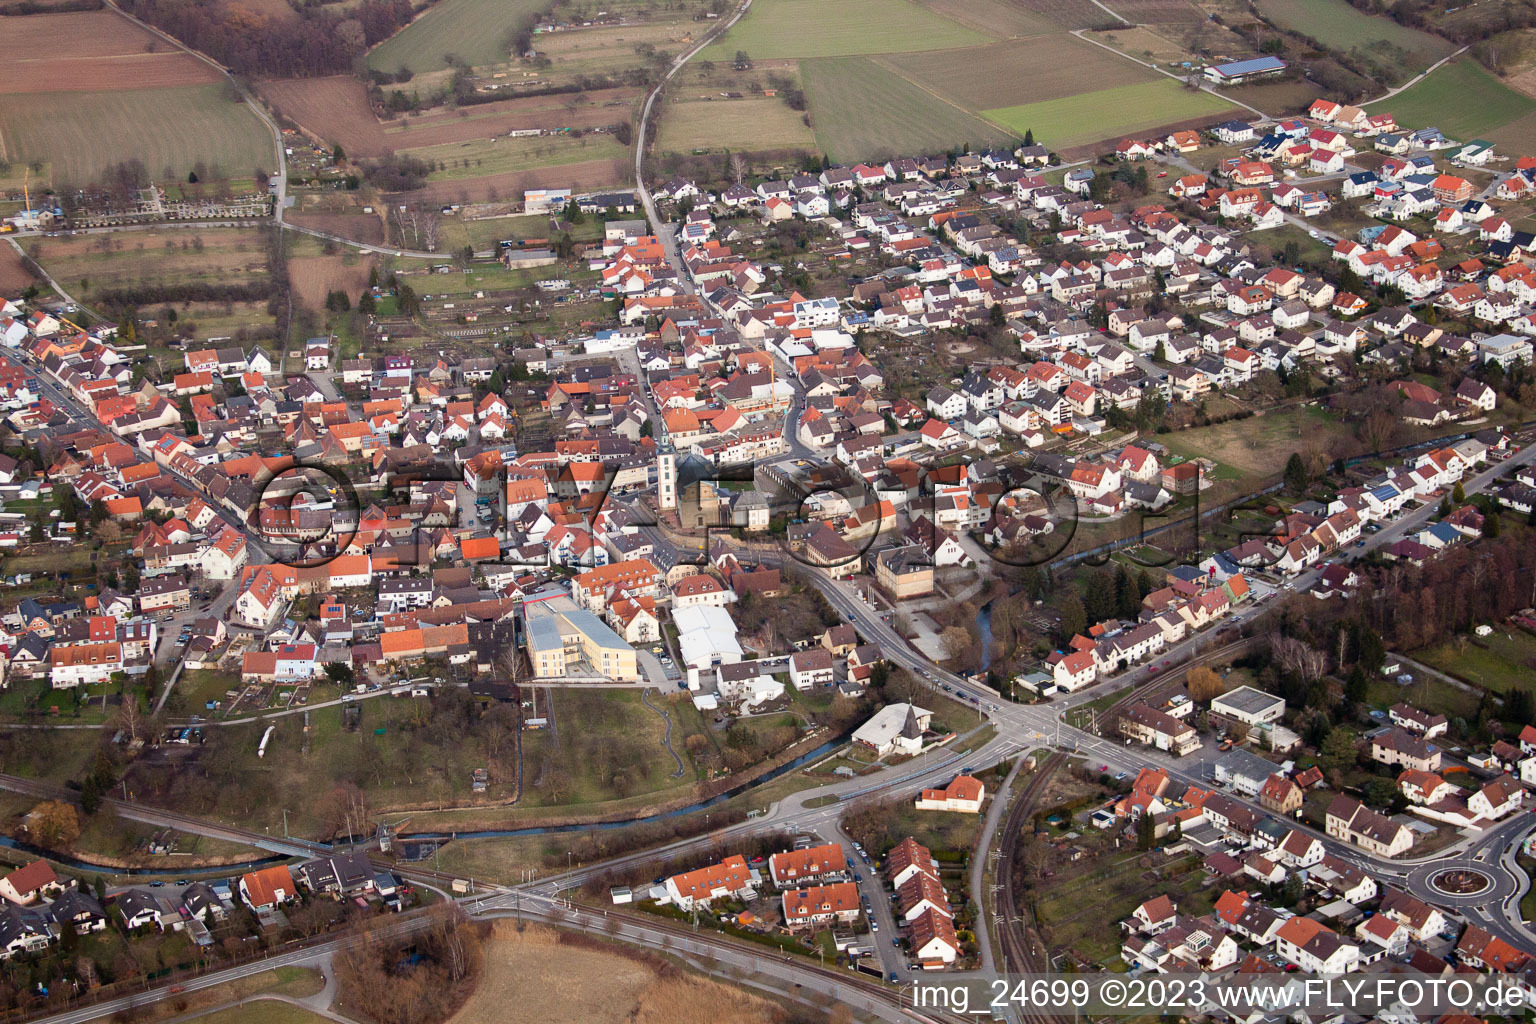 Quartier Ubstadt in Ubstadt-Weiher dans le département Bade-Wurtemberg, Allemagne vue d'en haut